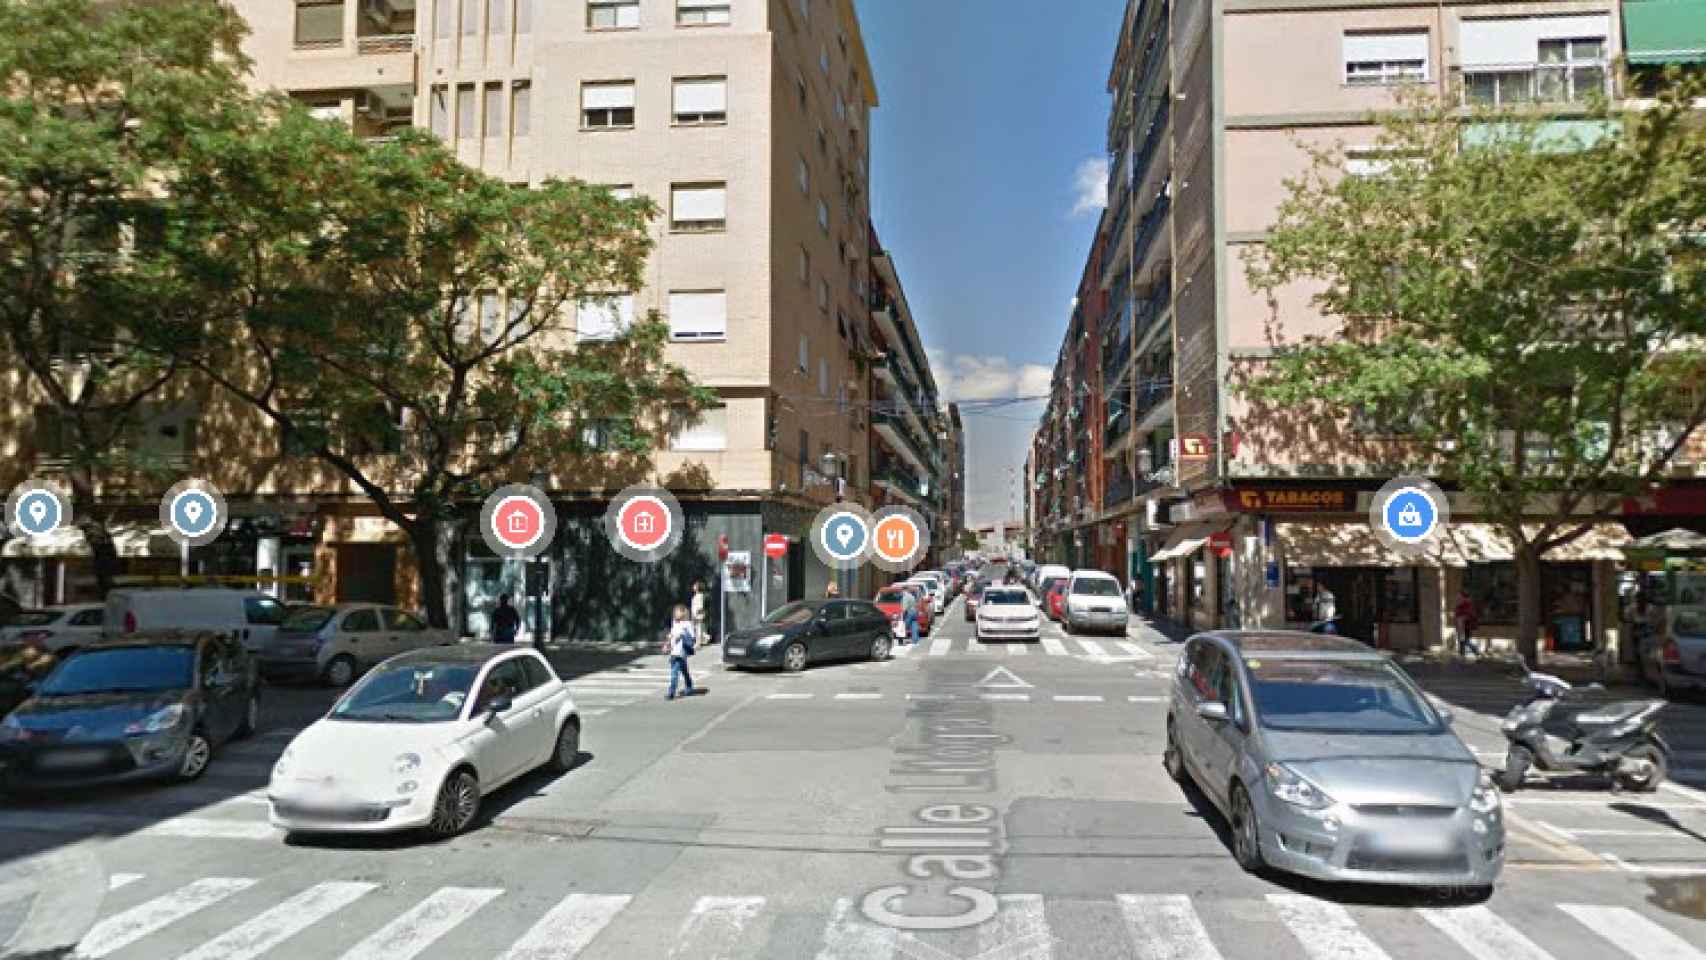 La calle Valencia donde se produjo el asesinato.